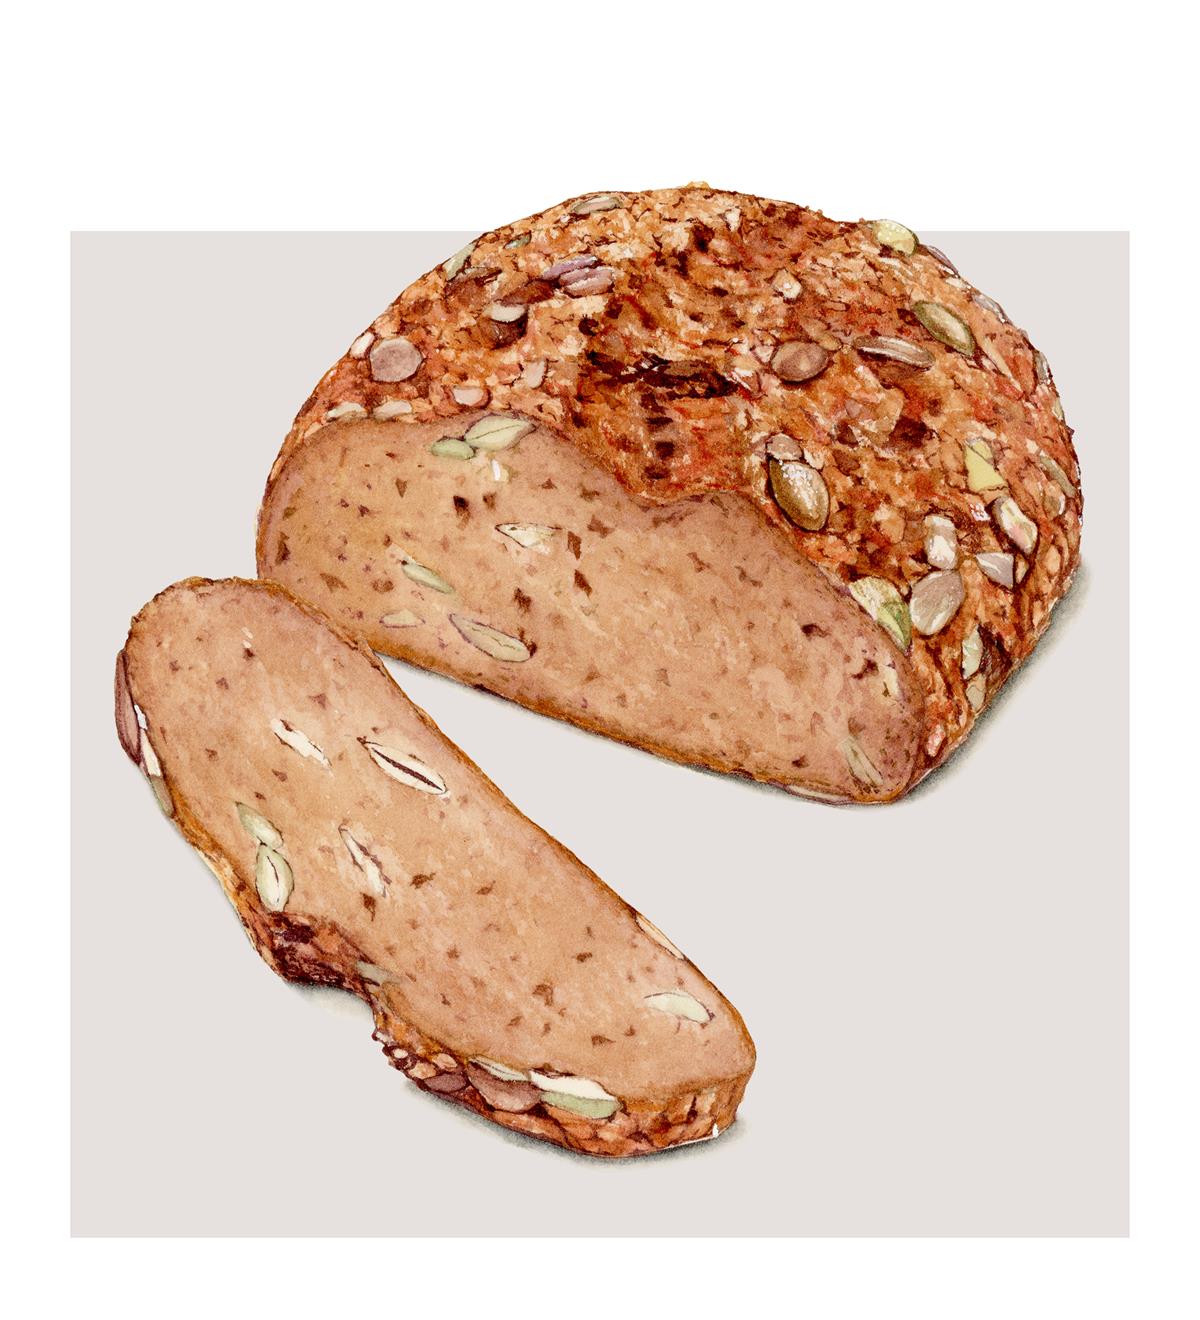 Joseph Brot, glutenfreies Bio Kürbis Hanfnuss Brot: 7,50 Euro